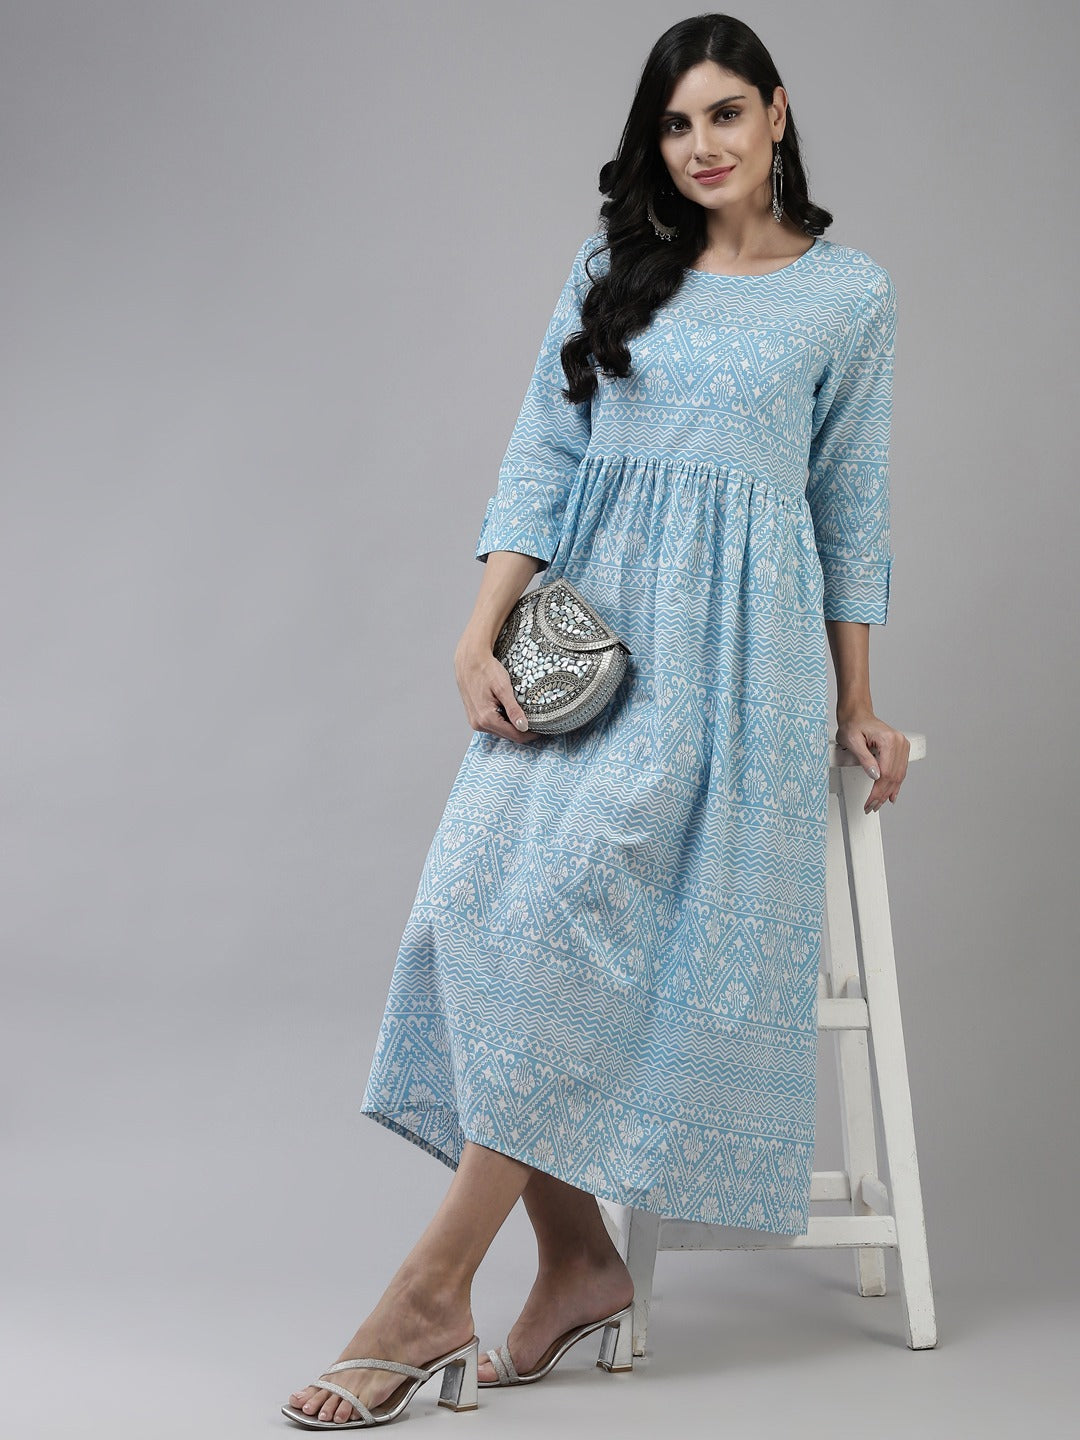 Blue Cotton Ethnic Midi Dress-Yufta Store-9786DRSSBS